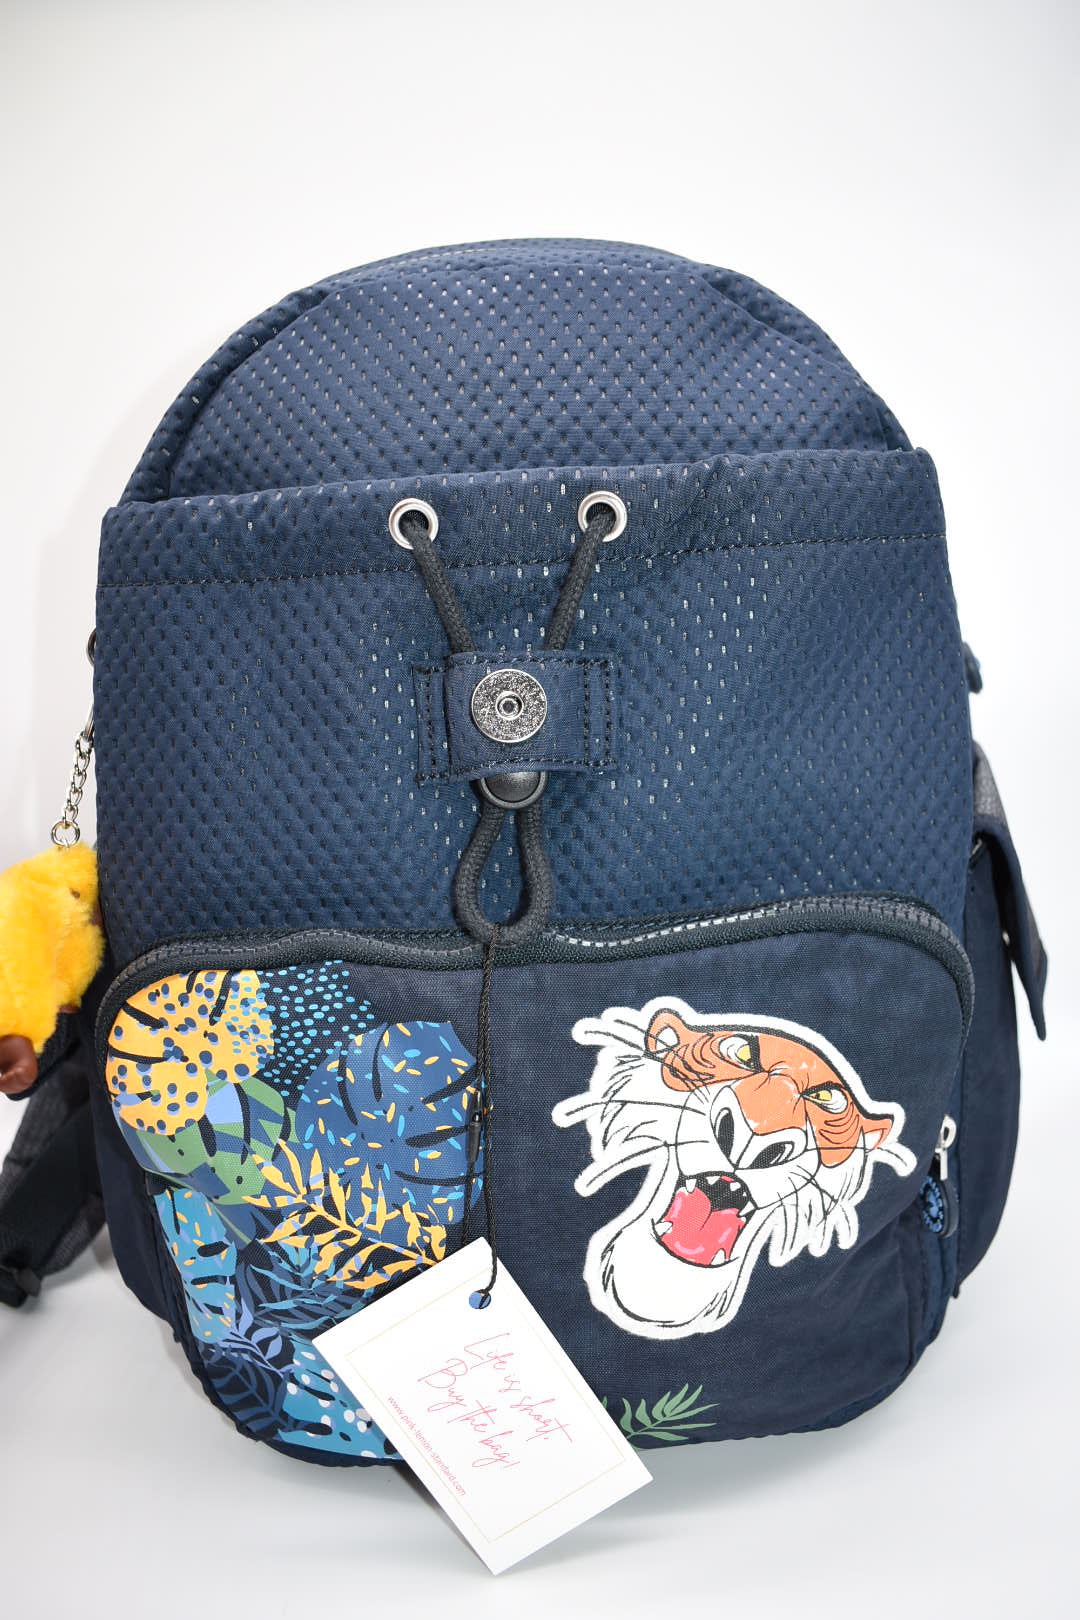 Kipling Jungle Book City Pack Medium Backpack